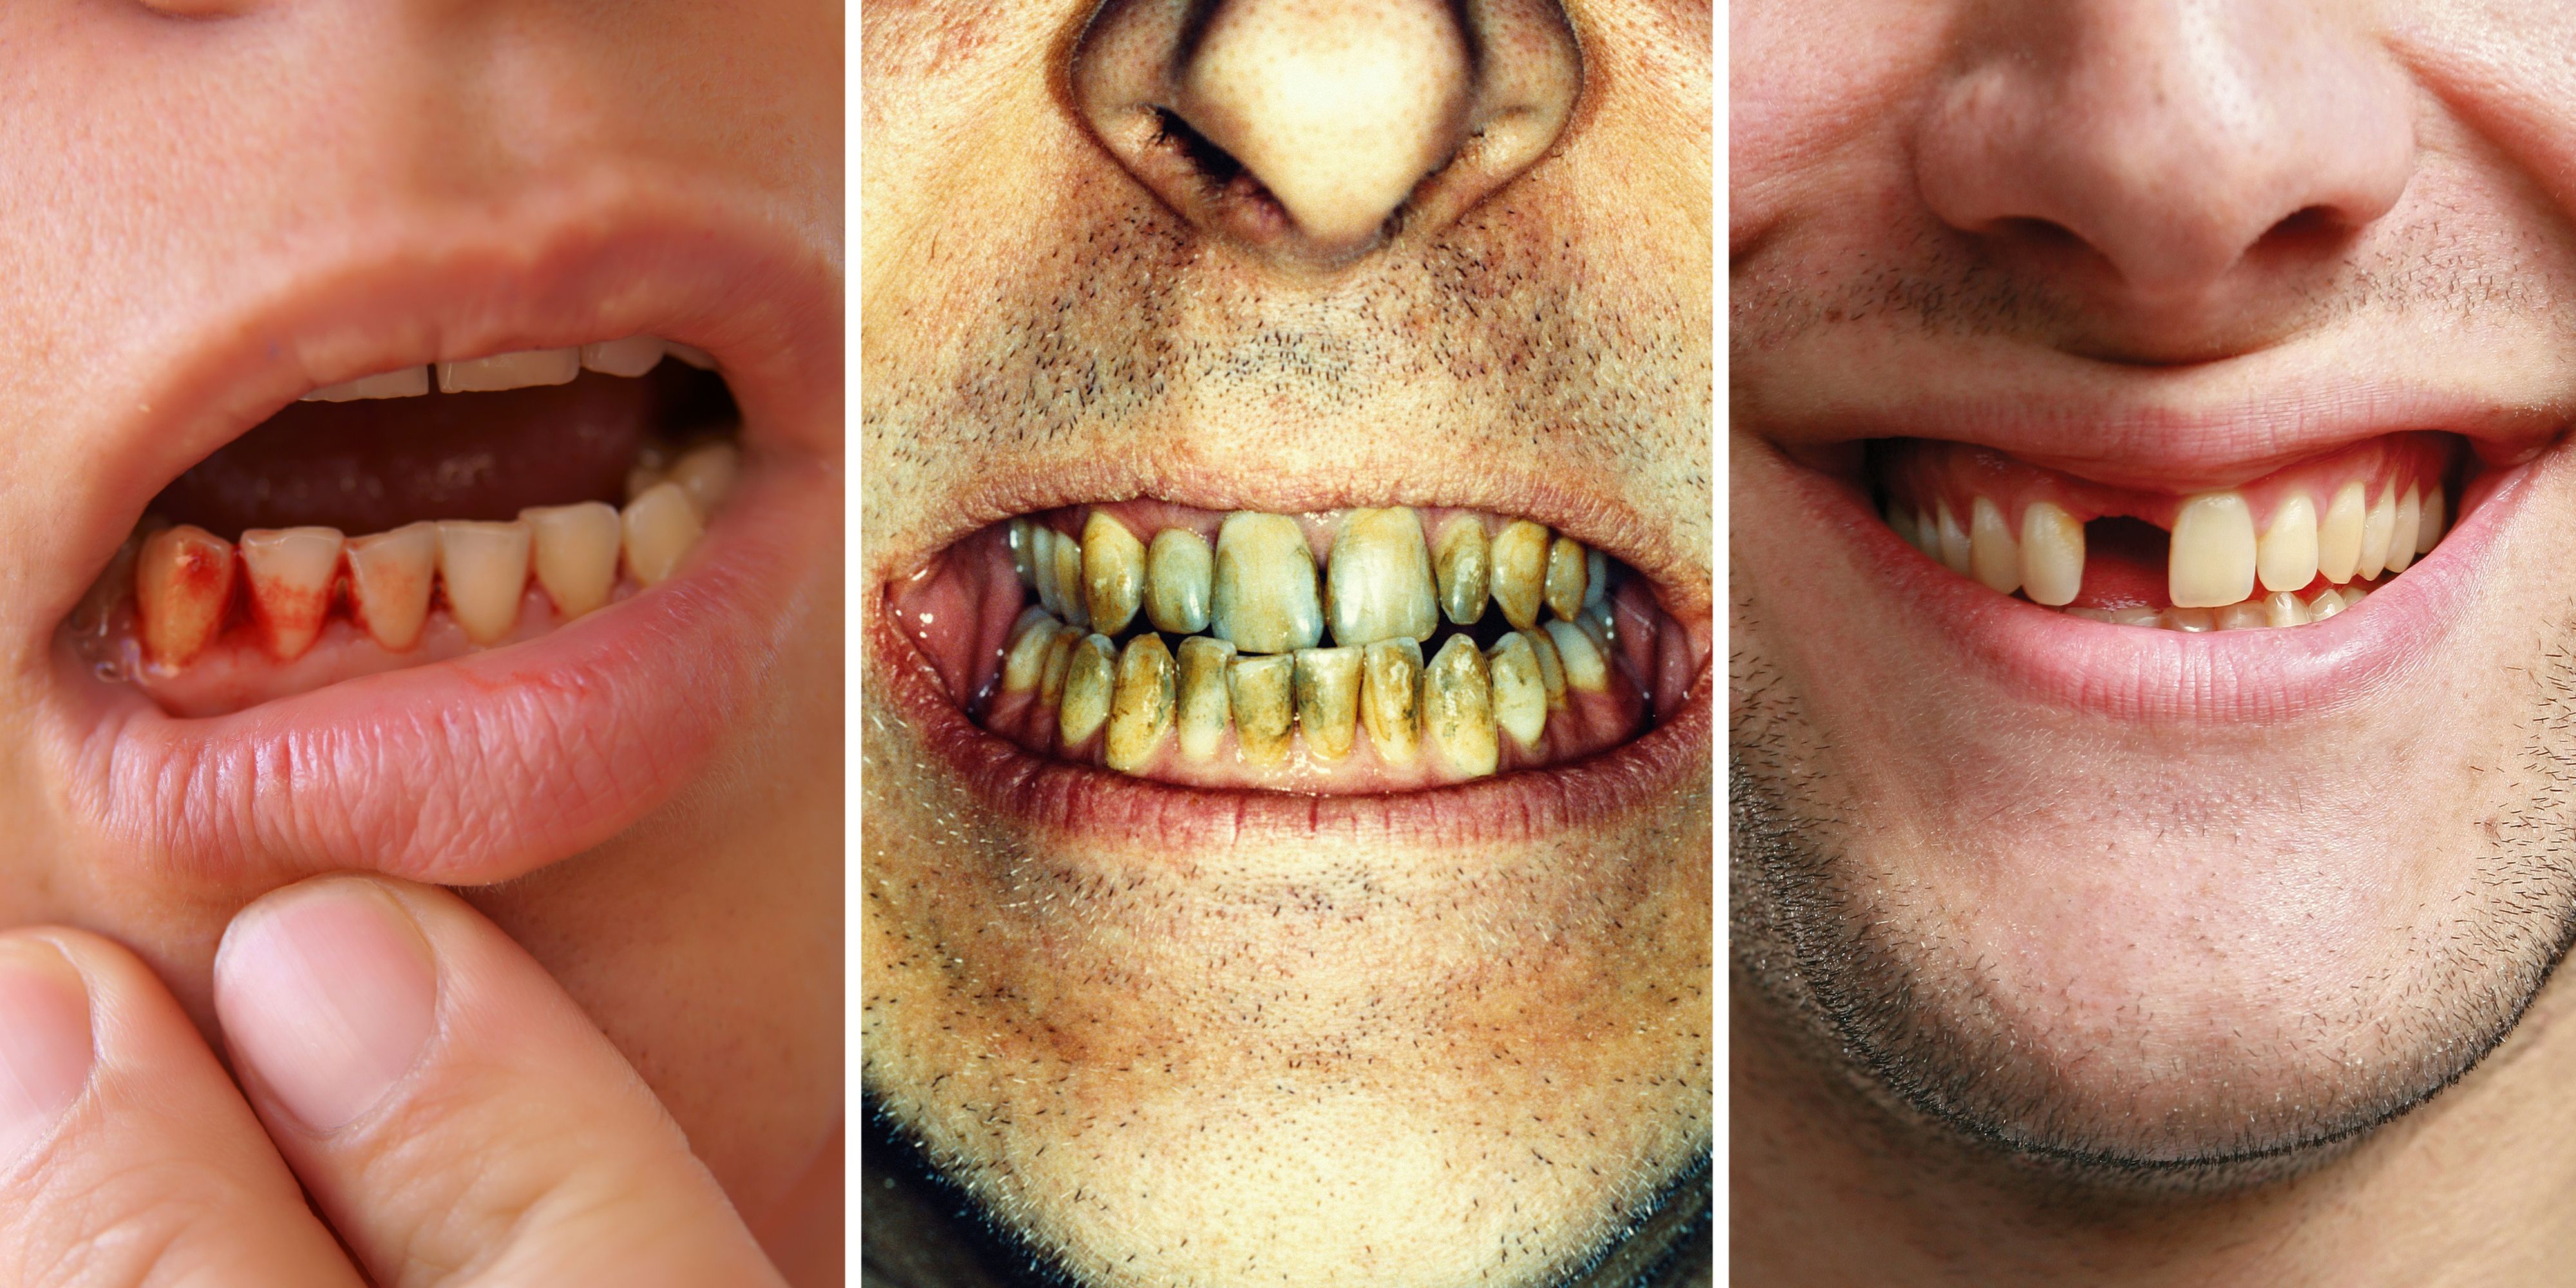 do dentist make more money from bad teeth